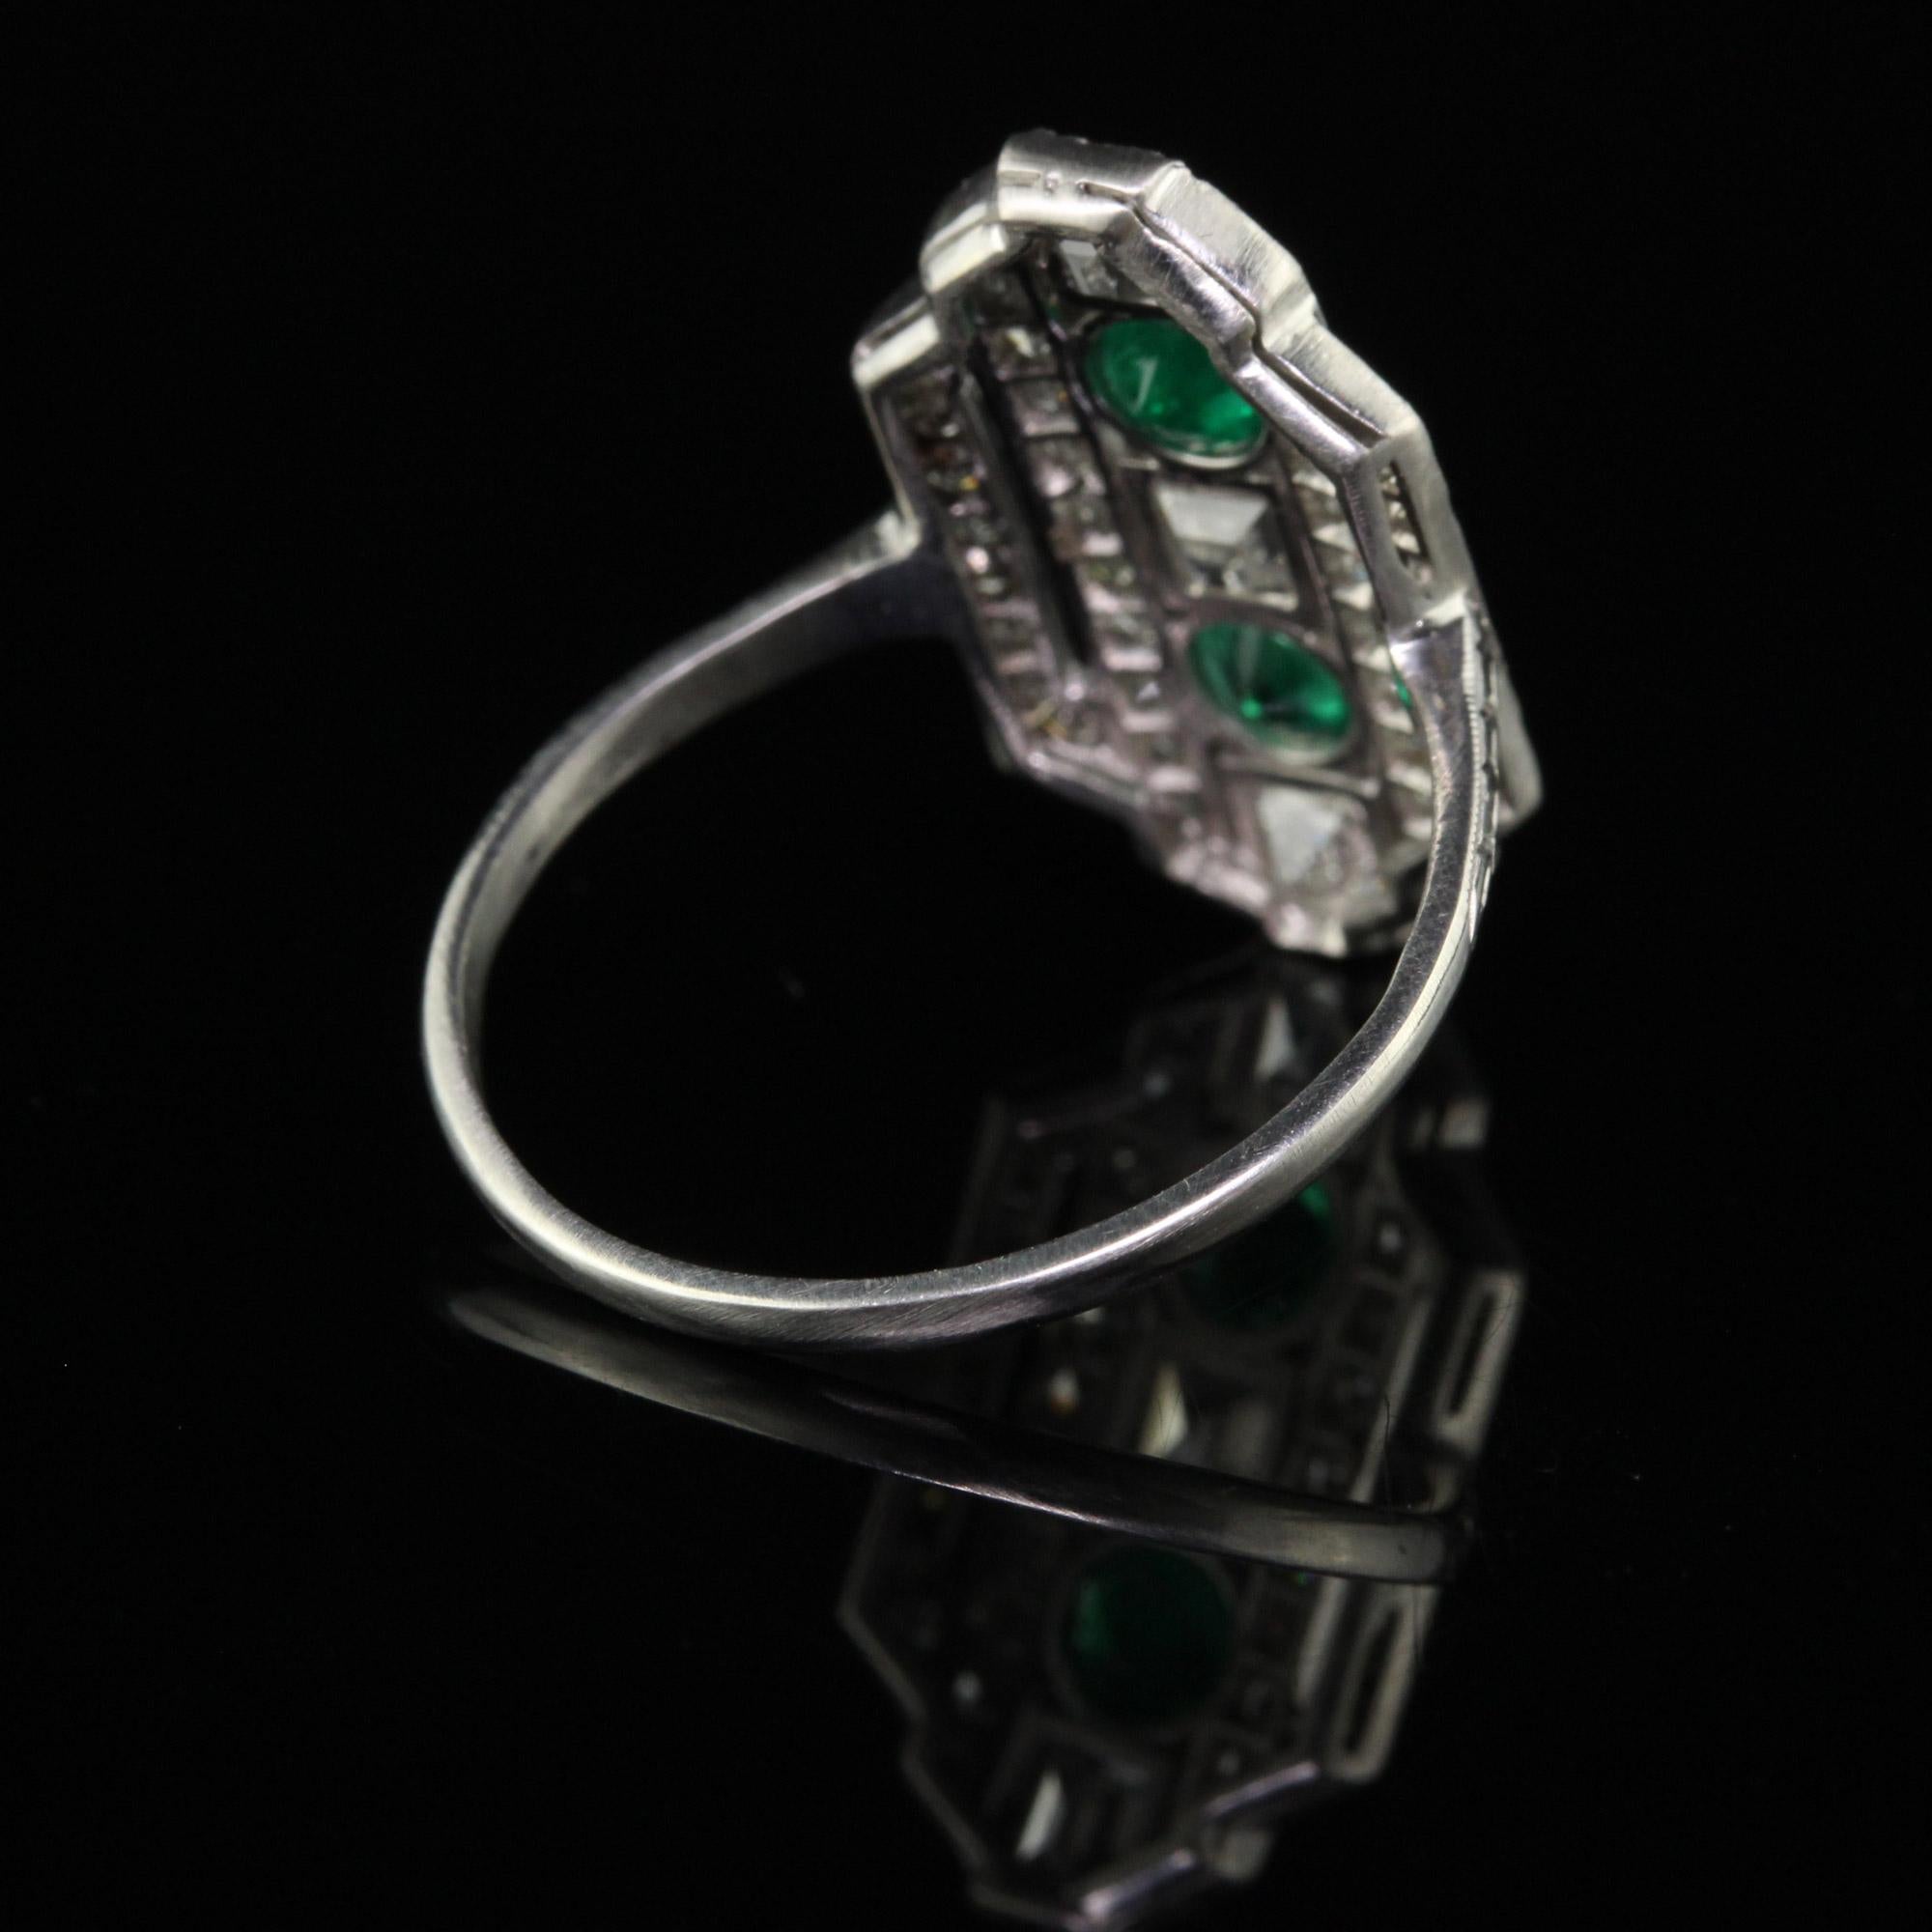 Antique Art Deco Platinum Carre Cut Diamond and Emerald Shield Ring - Size 6 3/4 2